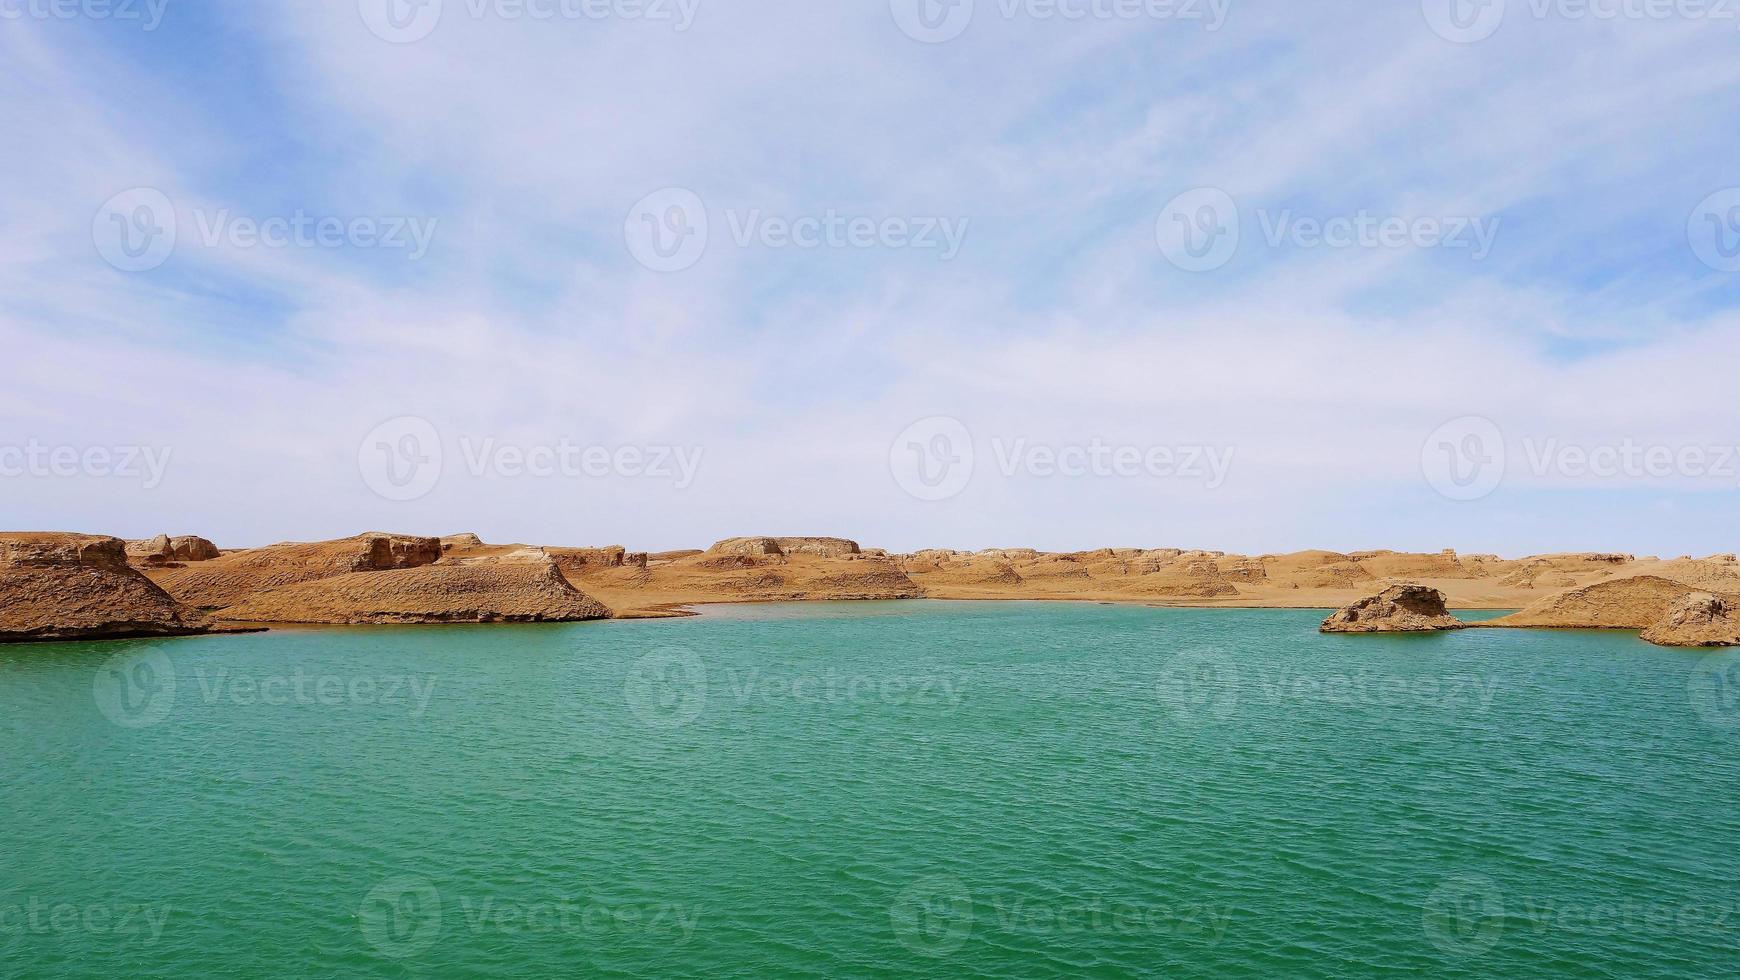 dachaidan wusute vatten yadan geologiska park Qinghai Kina foto